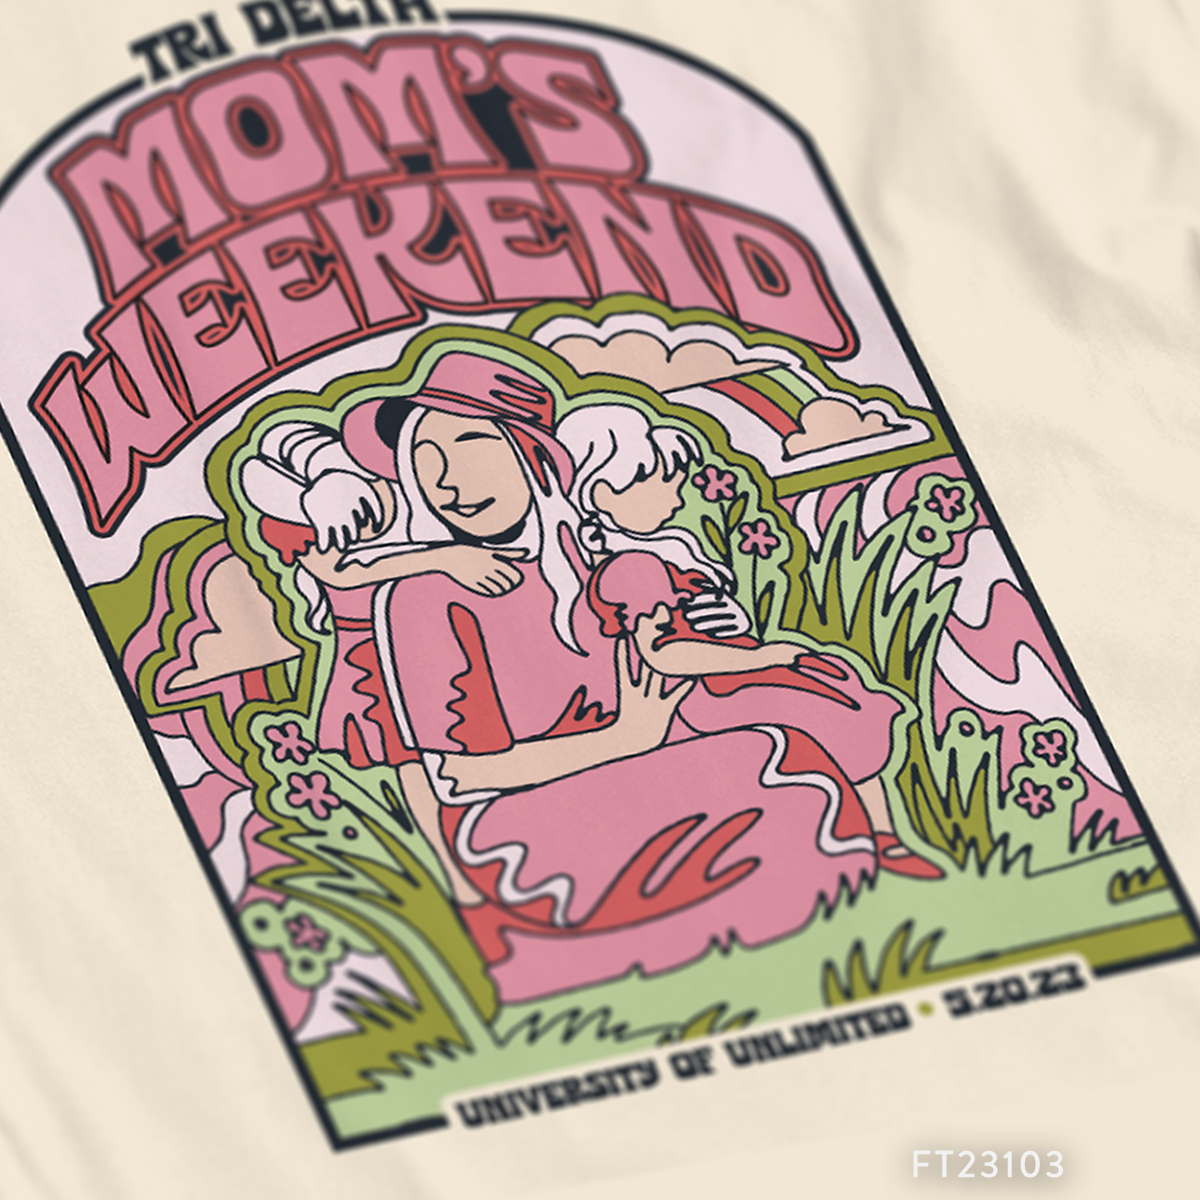 Delta Delta Delta Mom's Weekend T-Shirt Design